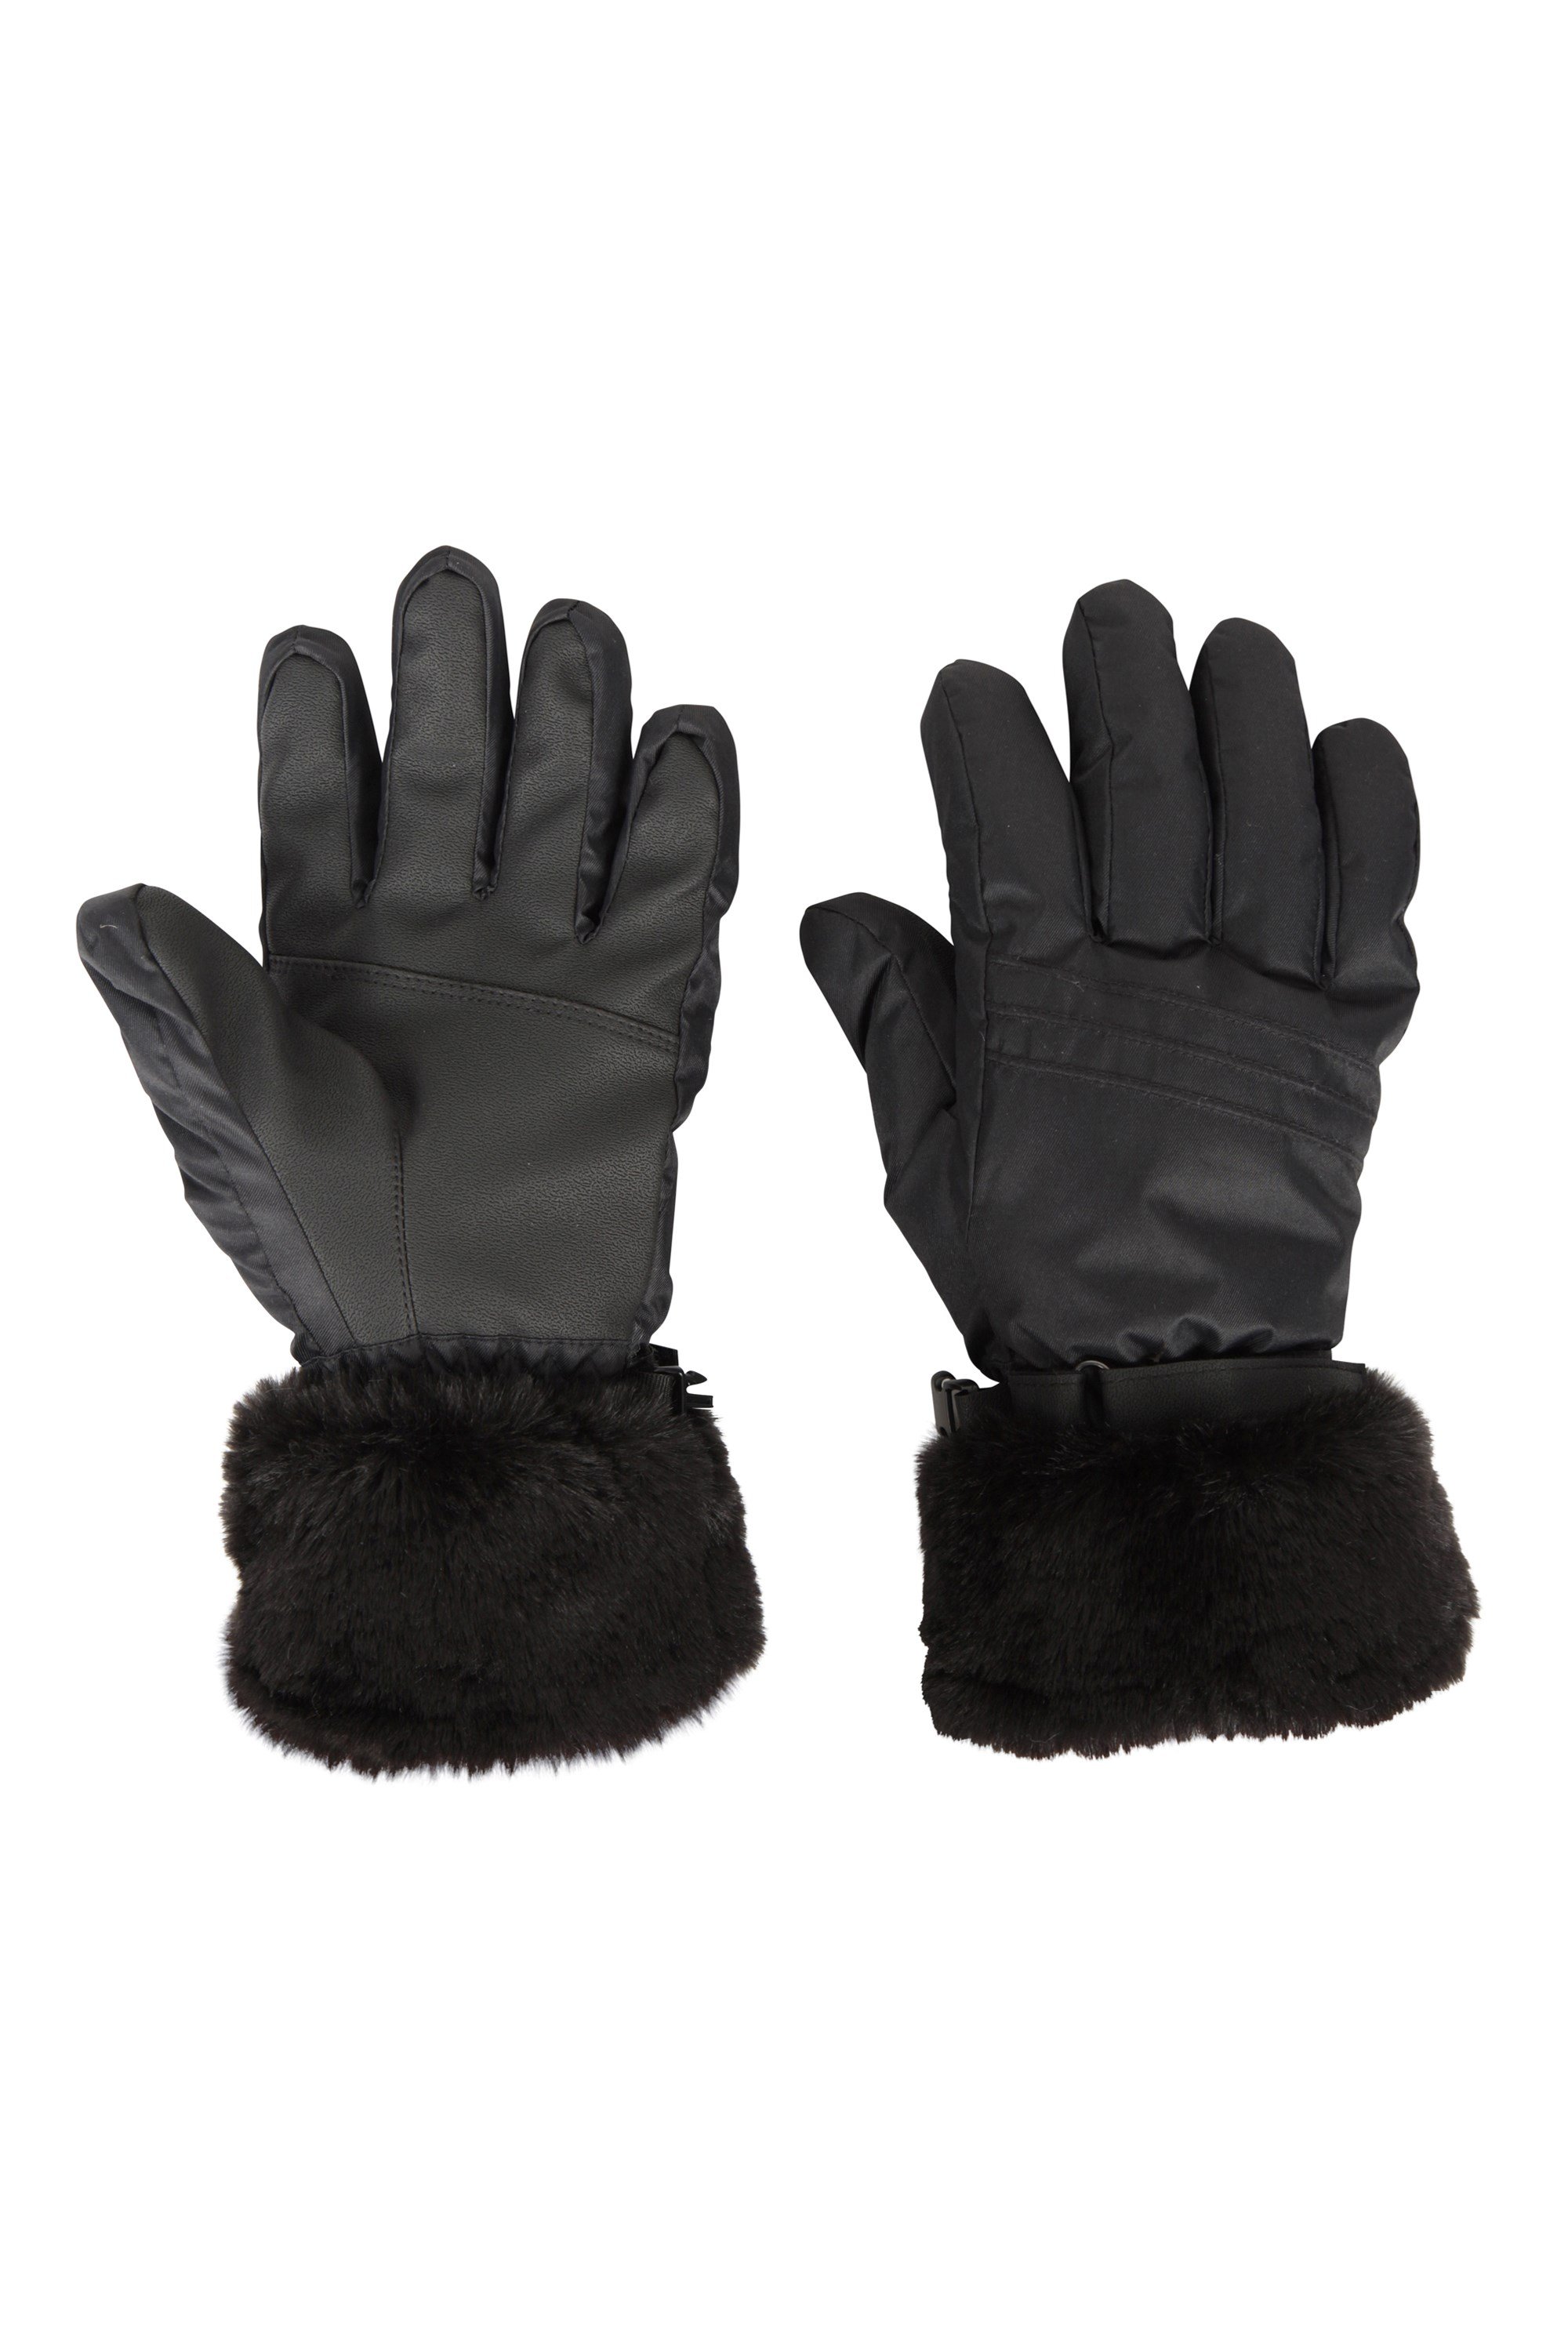 Parallax Womens Waterproof Ski Gloves - Black